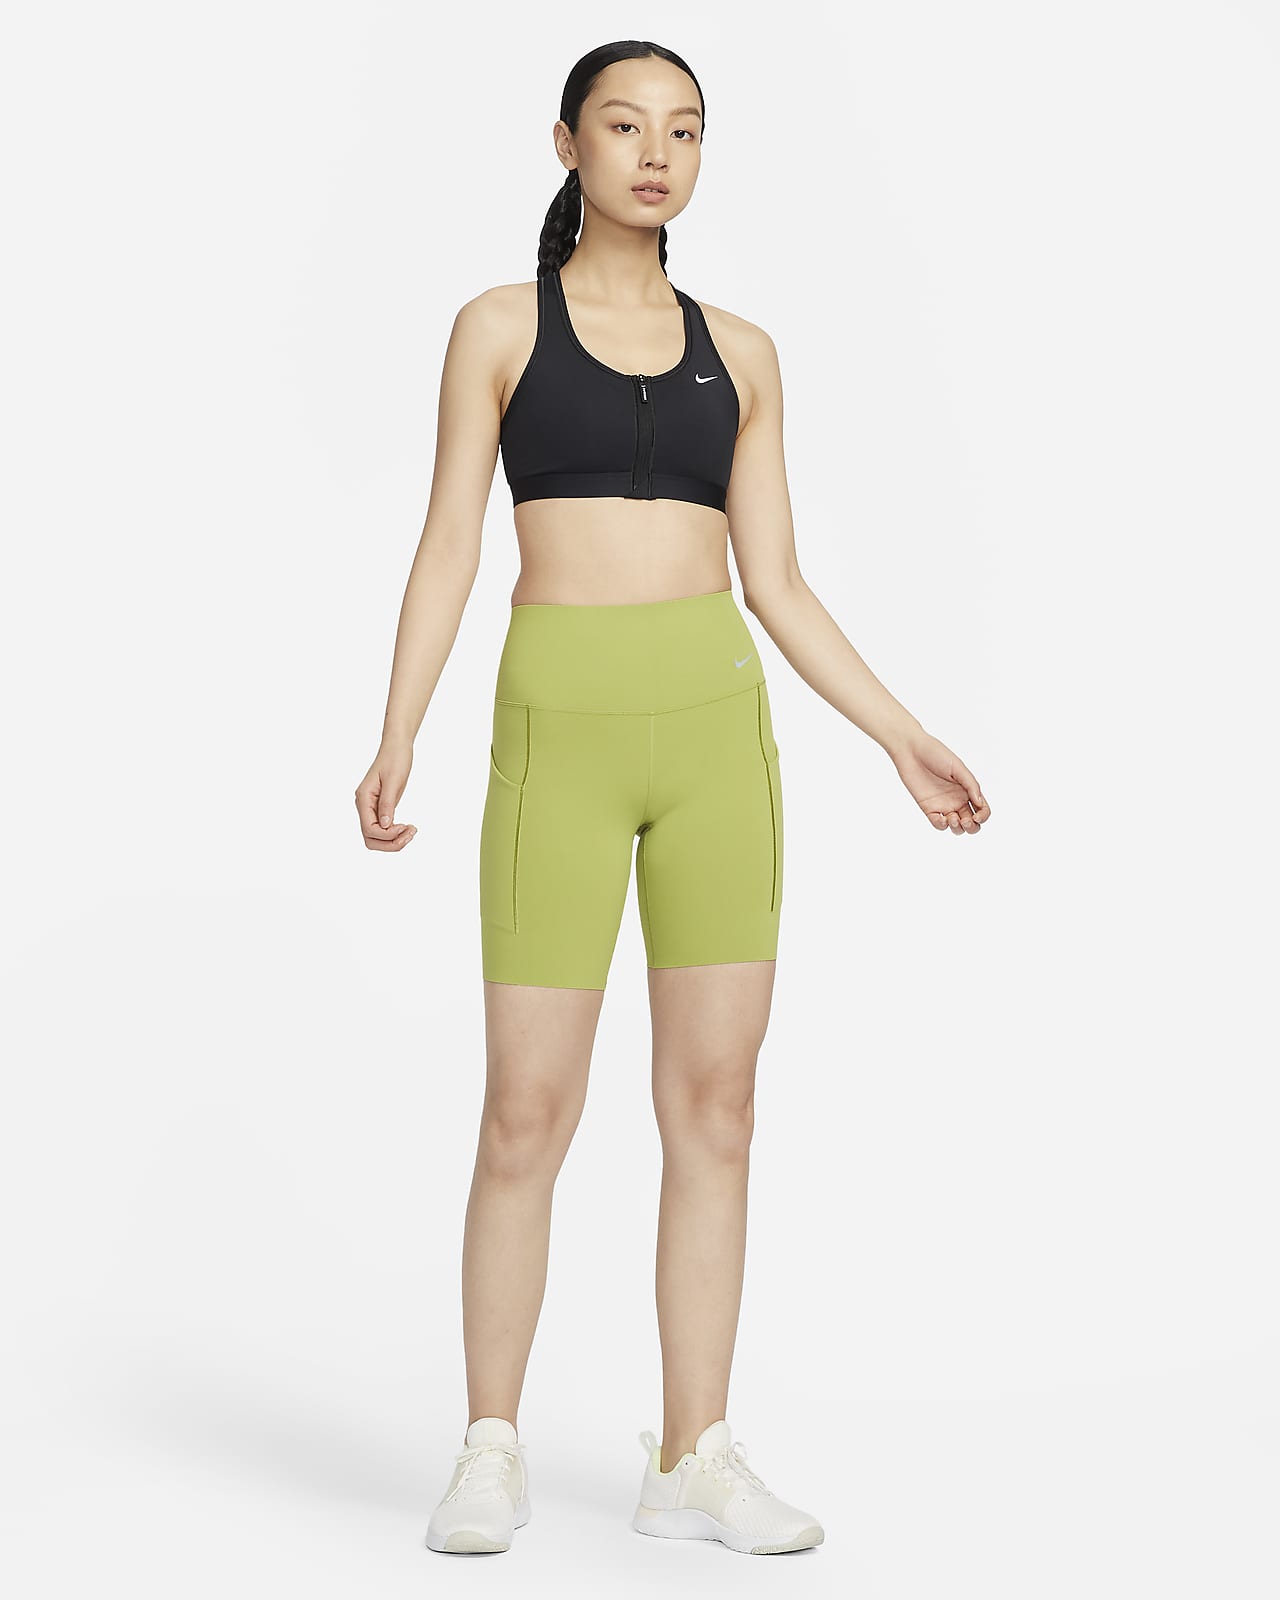 Nike zip up sports bra - good support running yoga gym, Women's